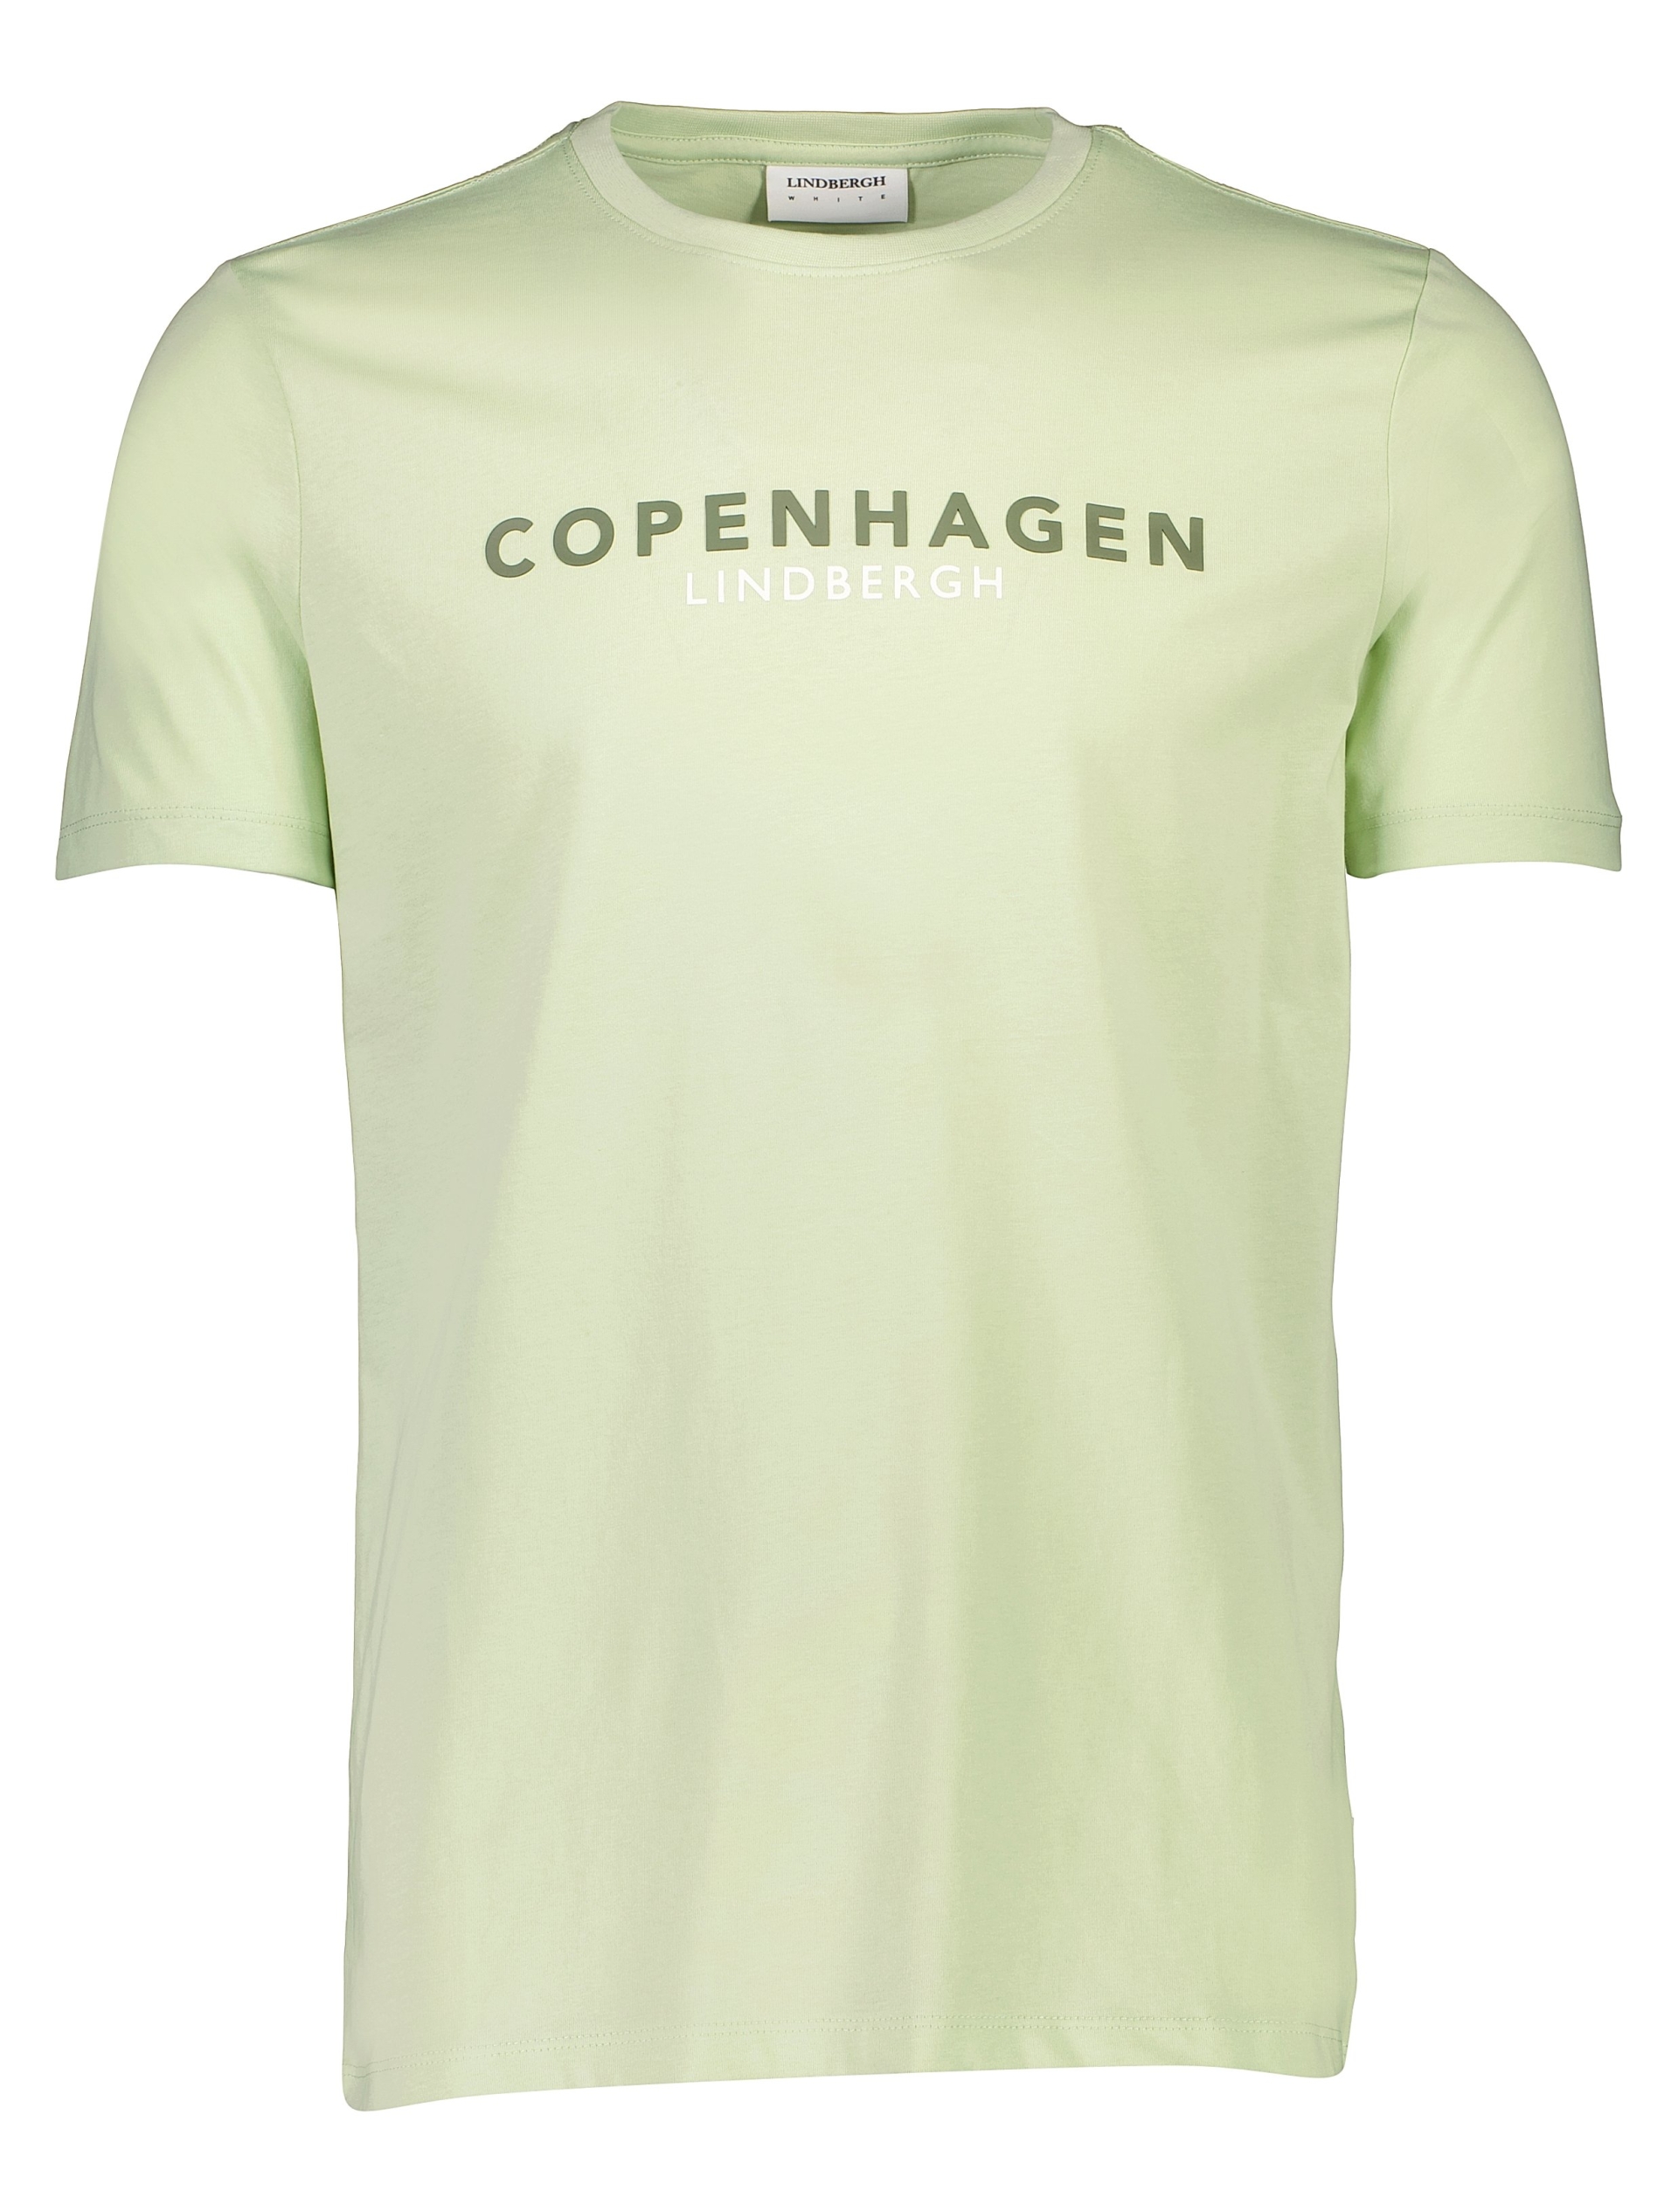 Lindbergh T-shirt grön / mint 224